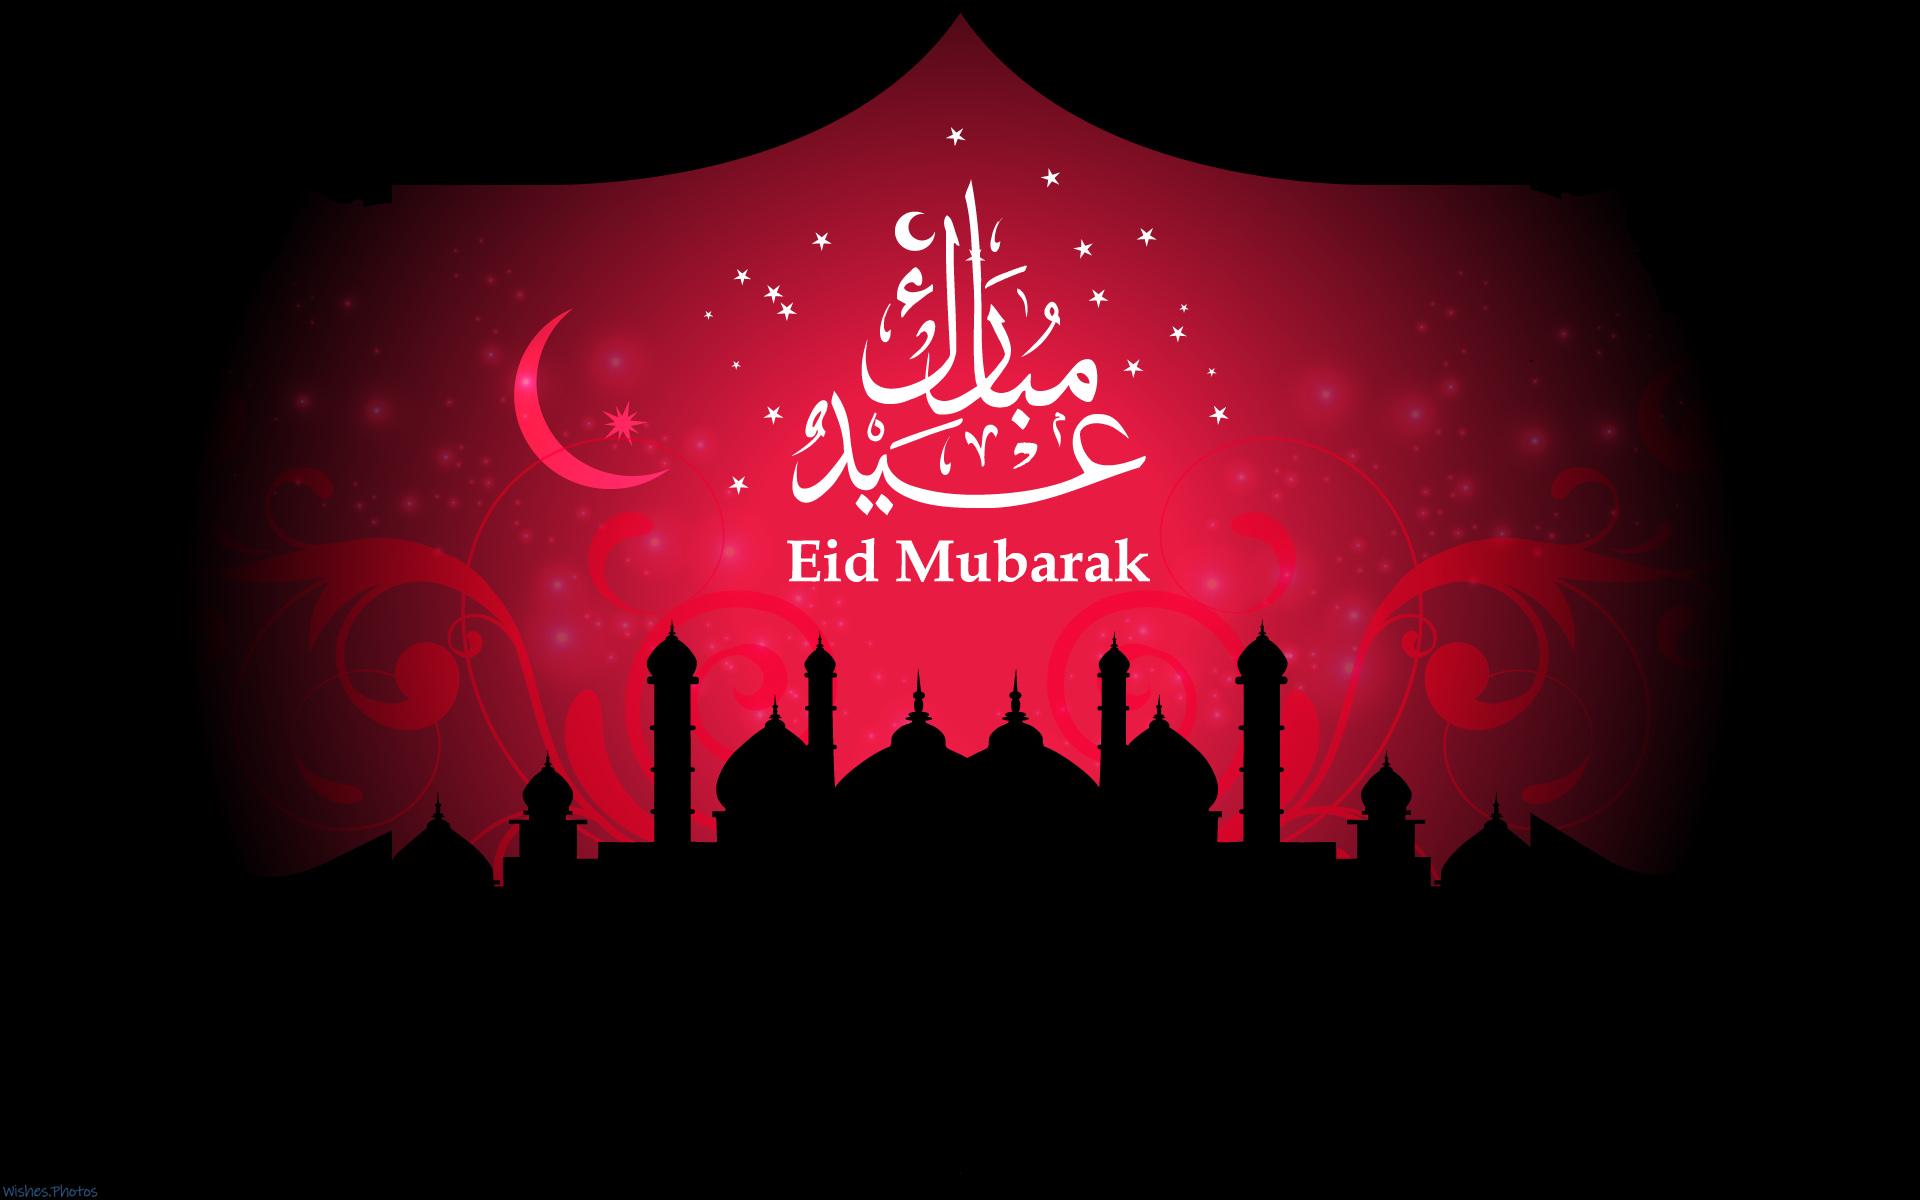 Eid mubarak hd wallpapers free download